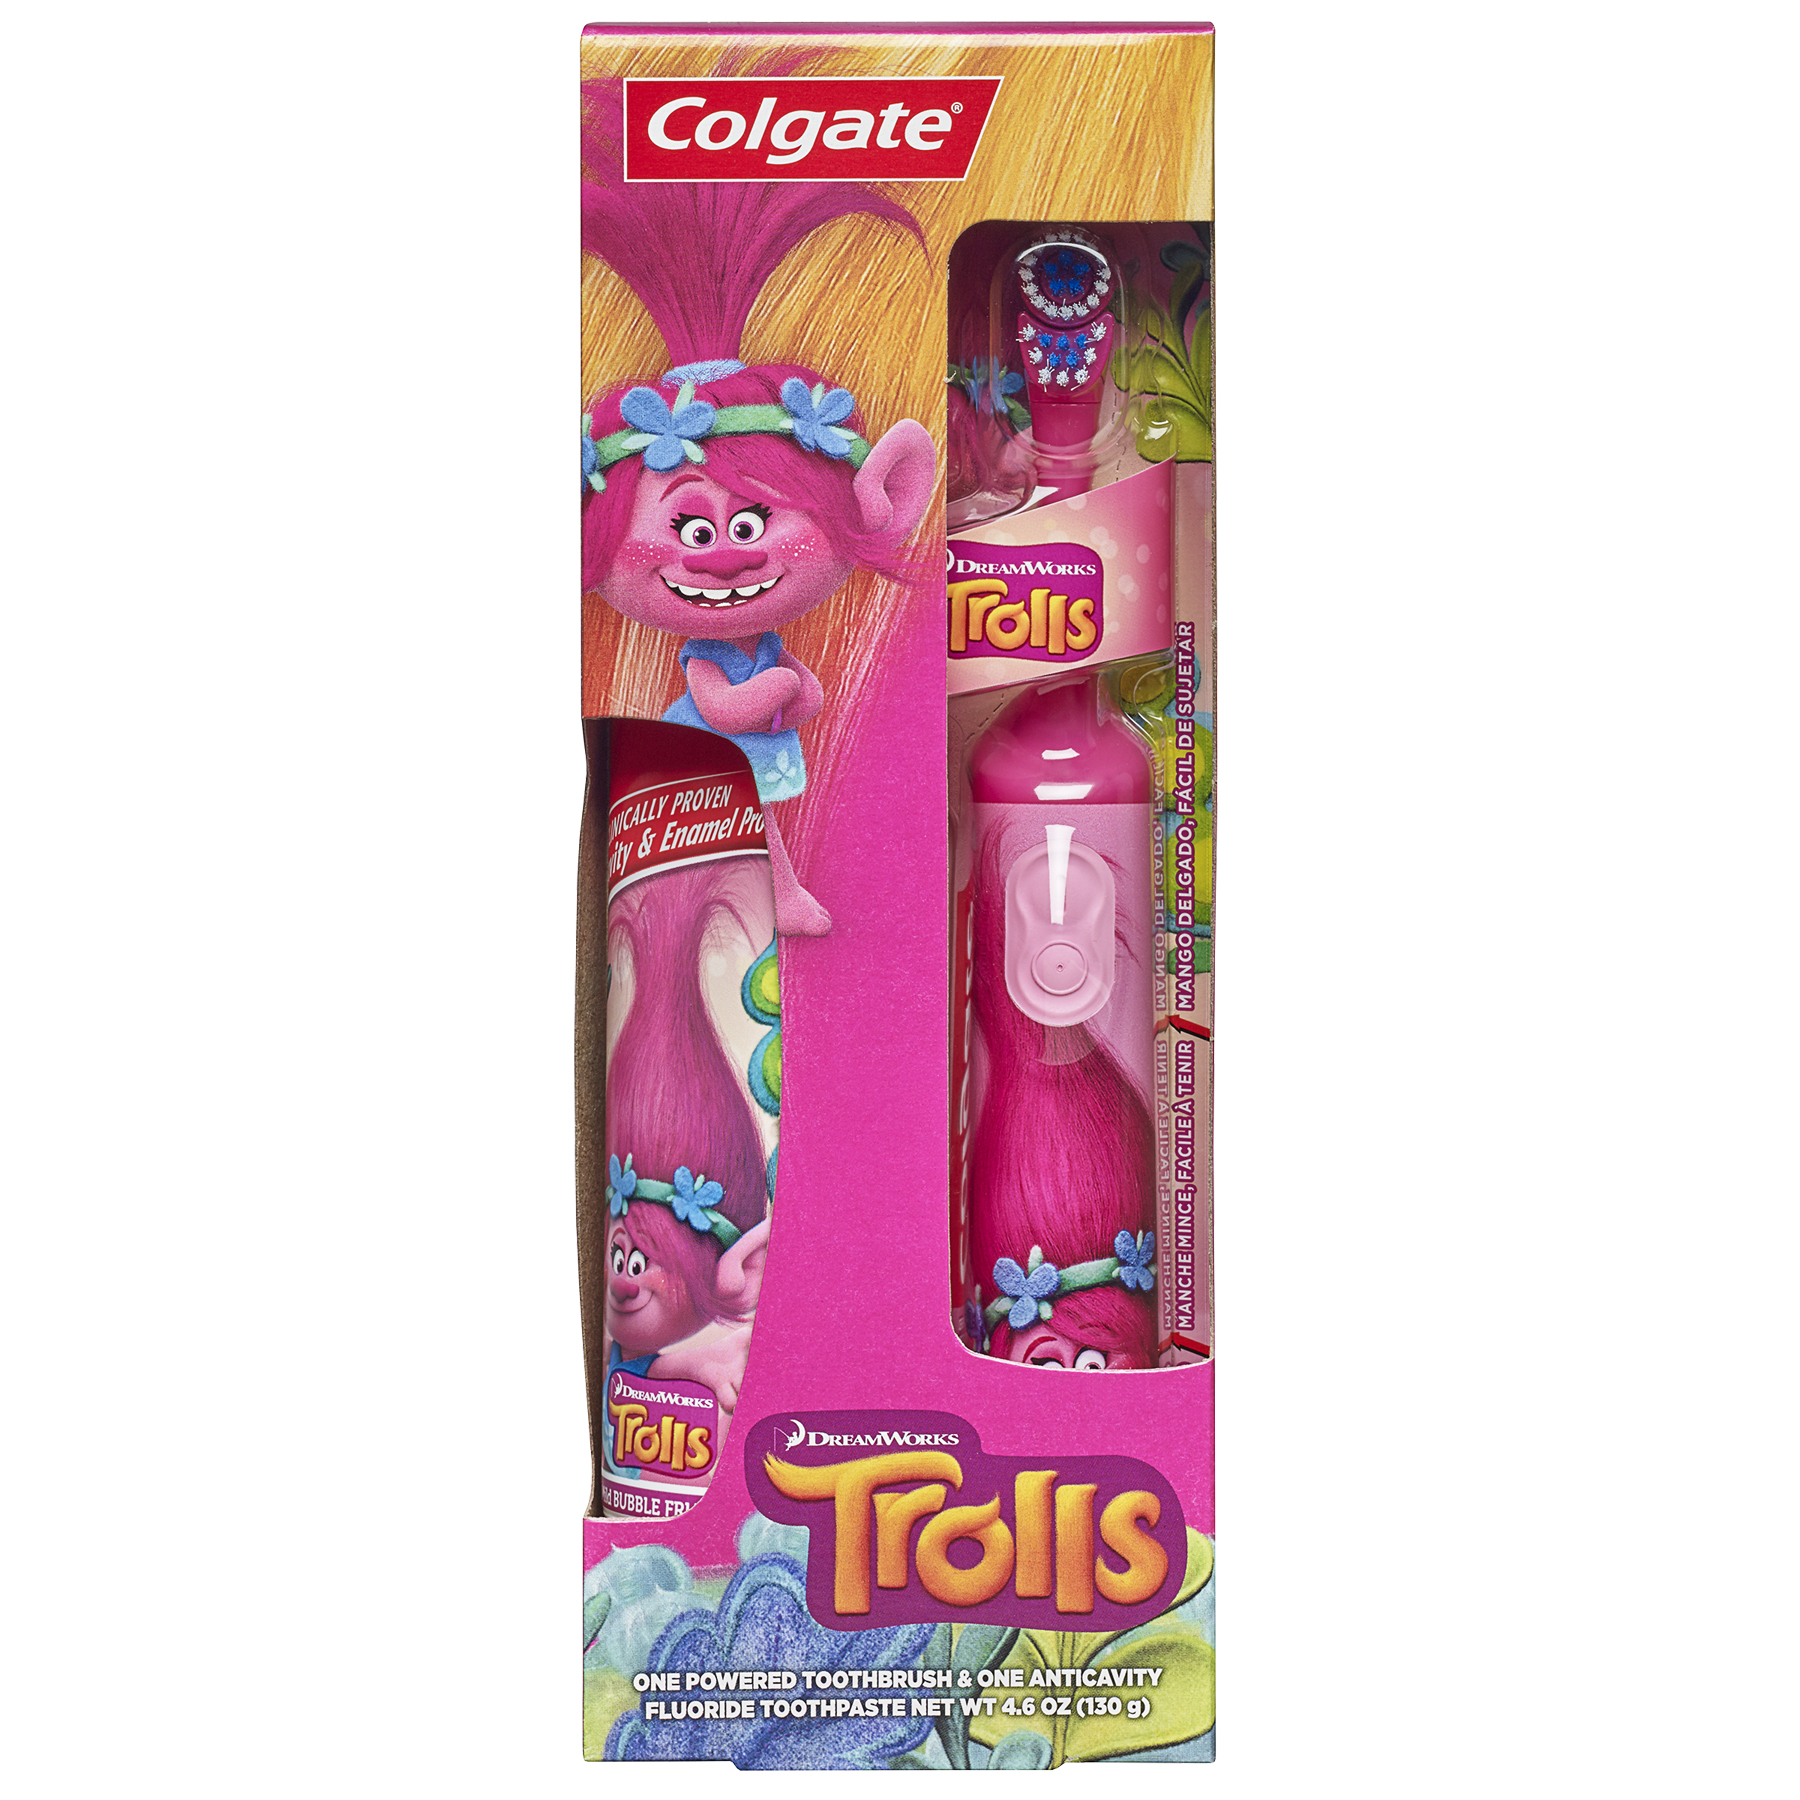 Colgate Kids Powered Toothbrush, Toothpaste Pack - Trolls - image 1 of 10